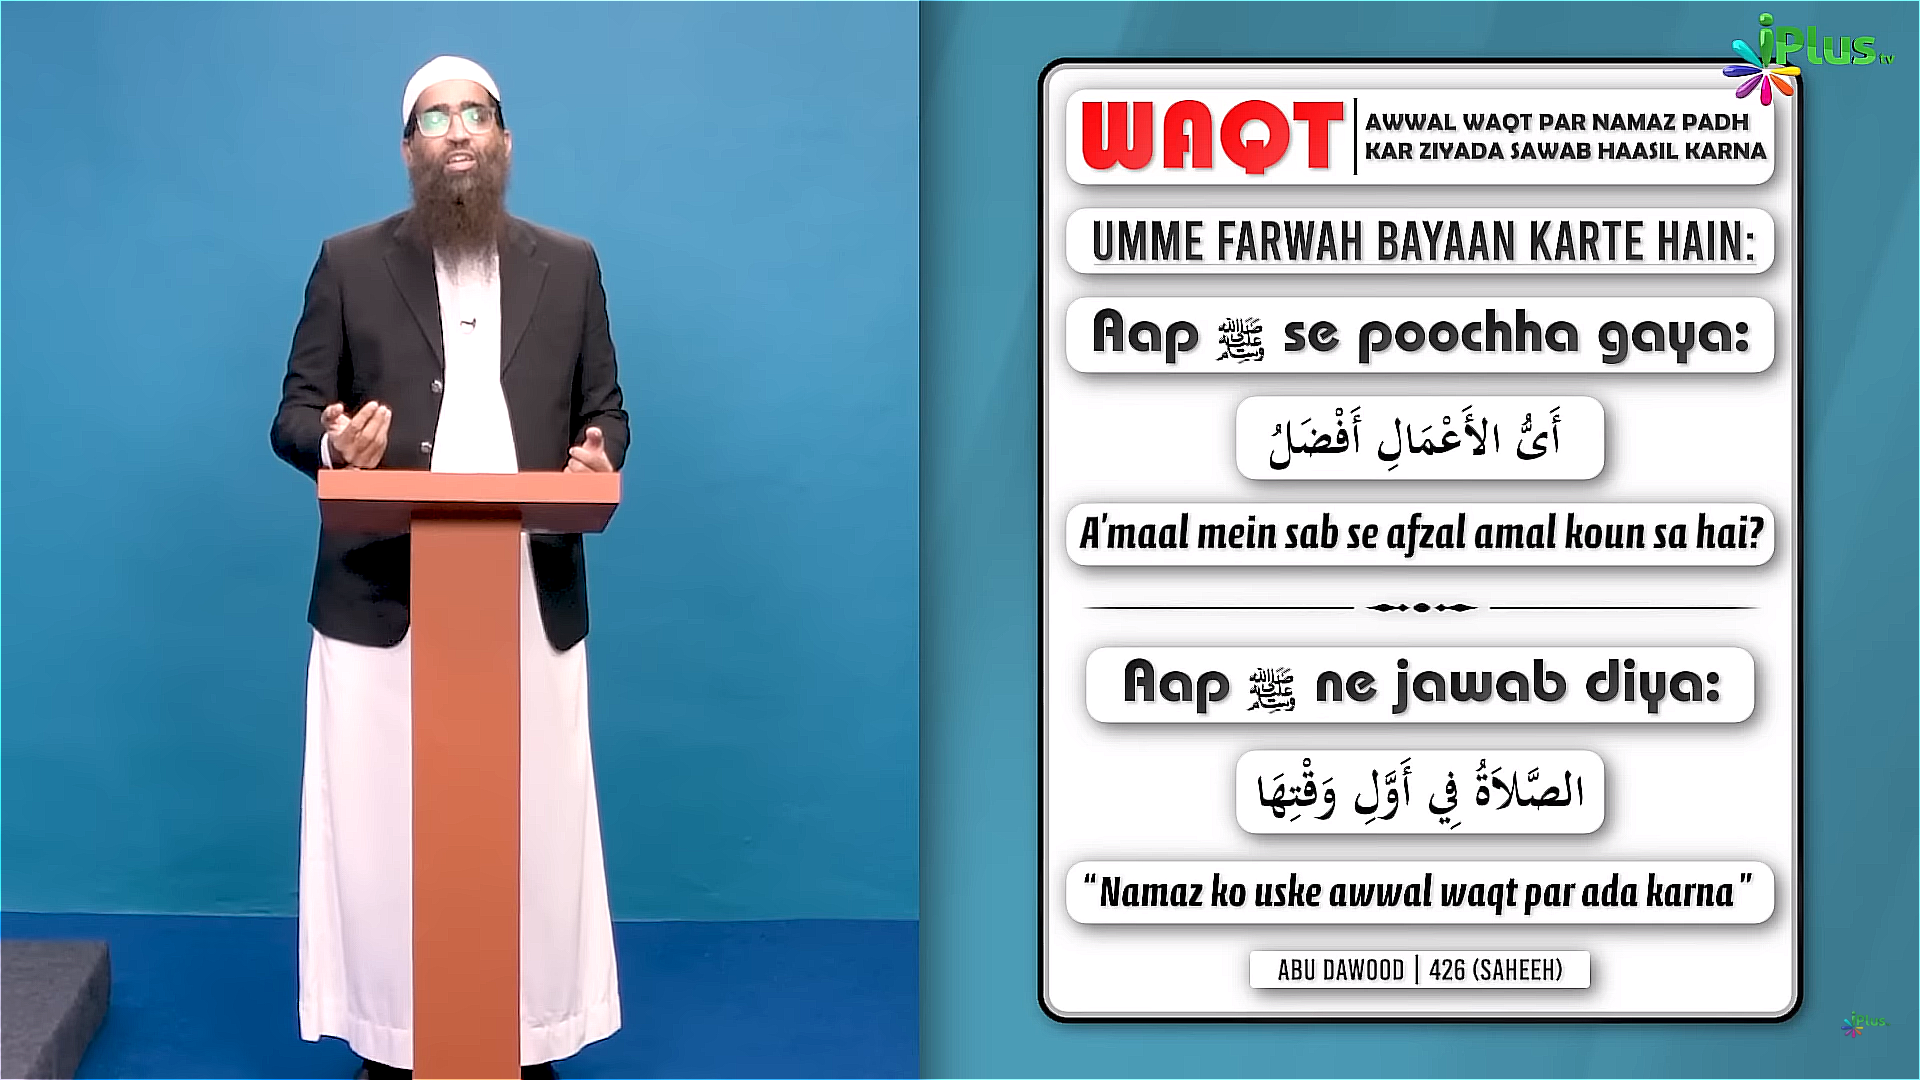 Abu Dawood - 426 (Saheeh) - Awwal Waqt Par Namaz Padh Kar Ziyada Sawab Haasil Karna (31)